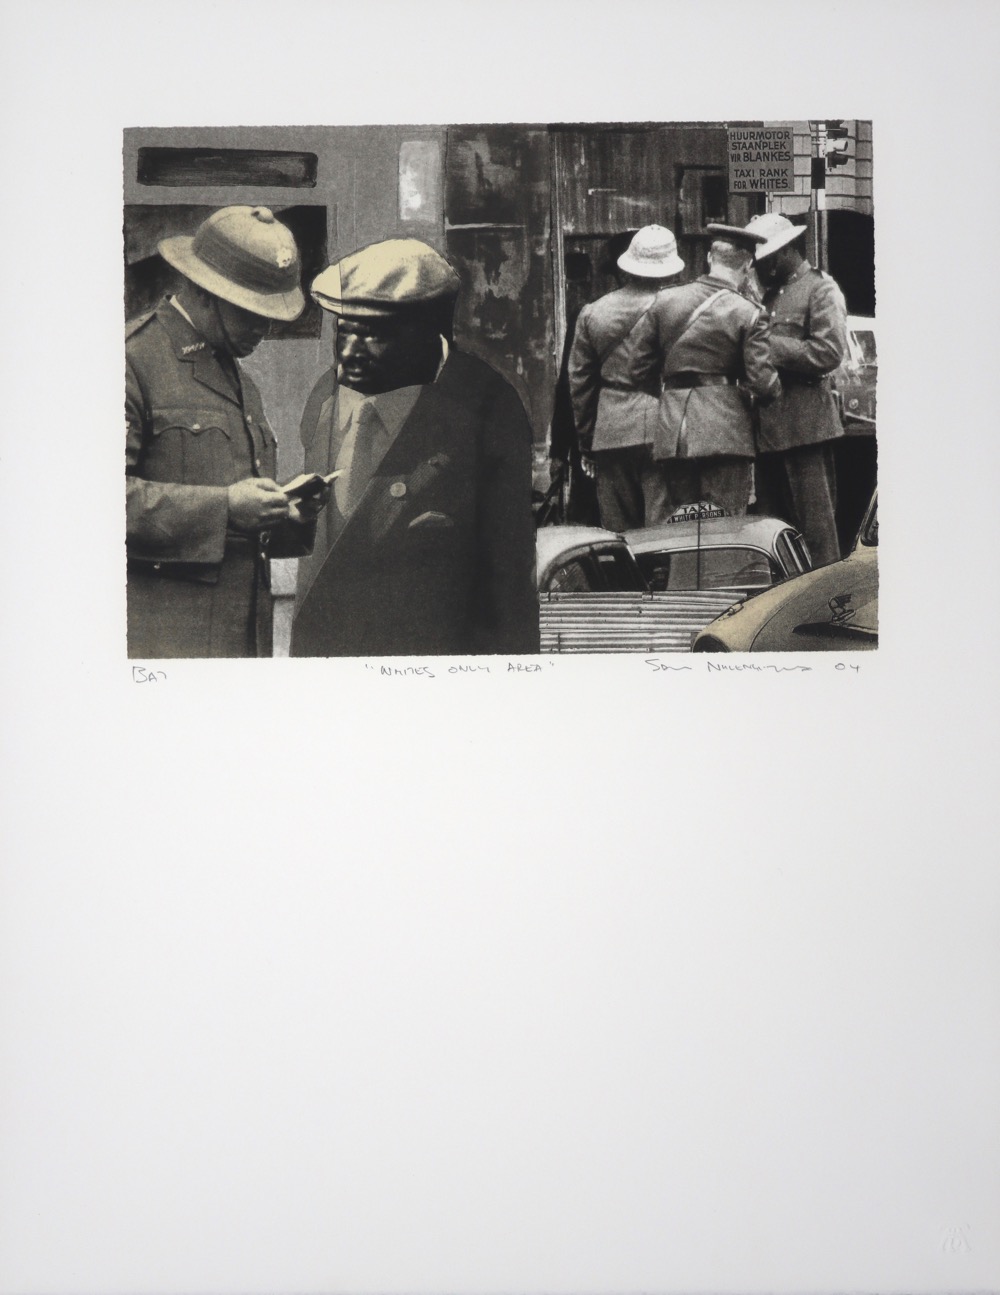 Apartheid policemen inspecting dom passes, photo collage with Apartheid era signage